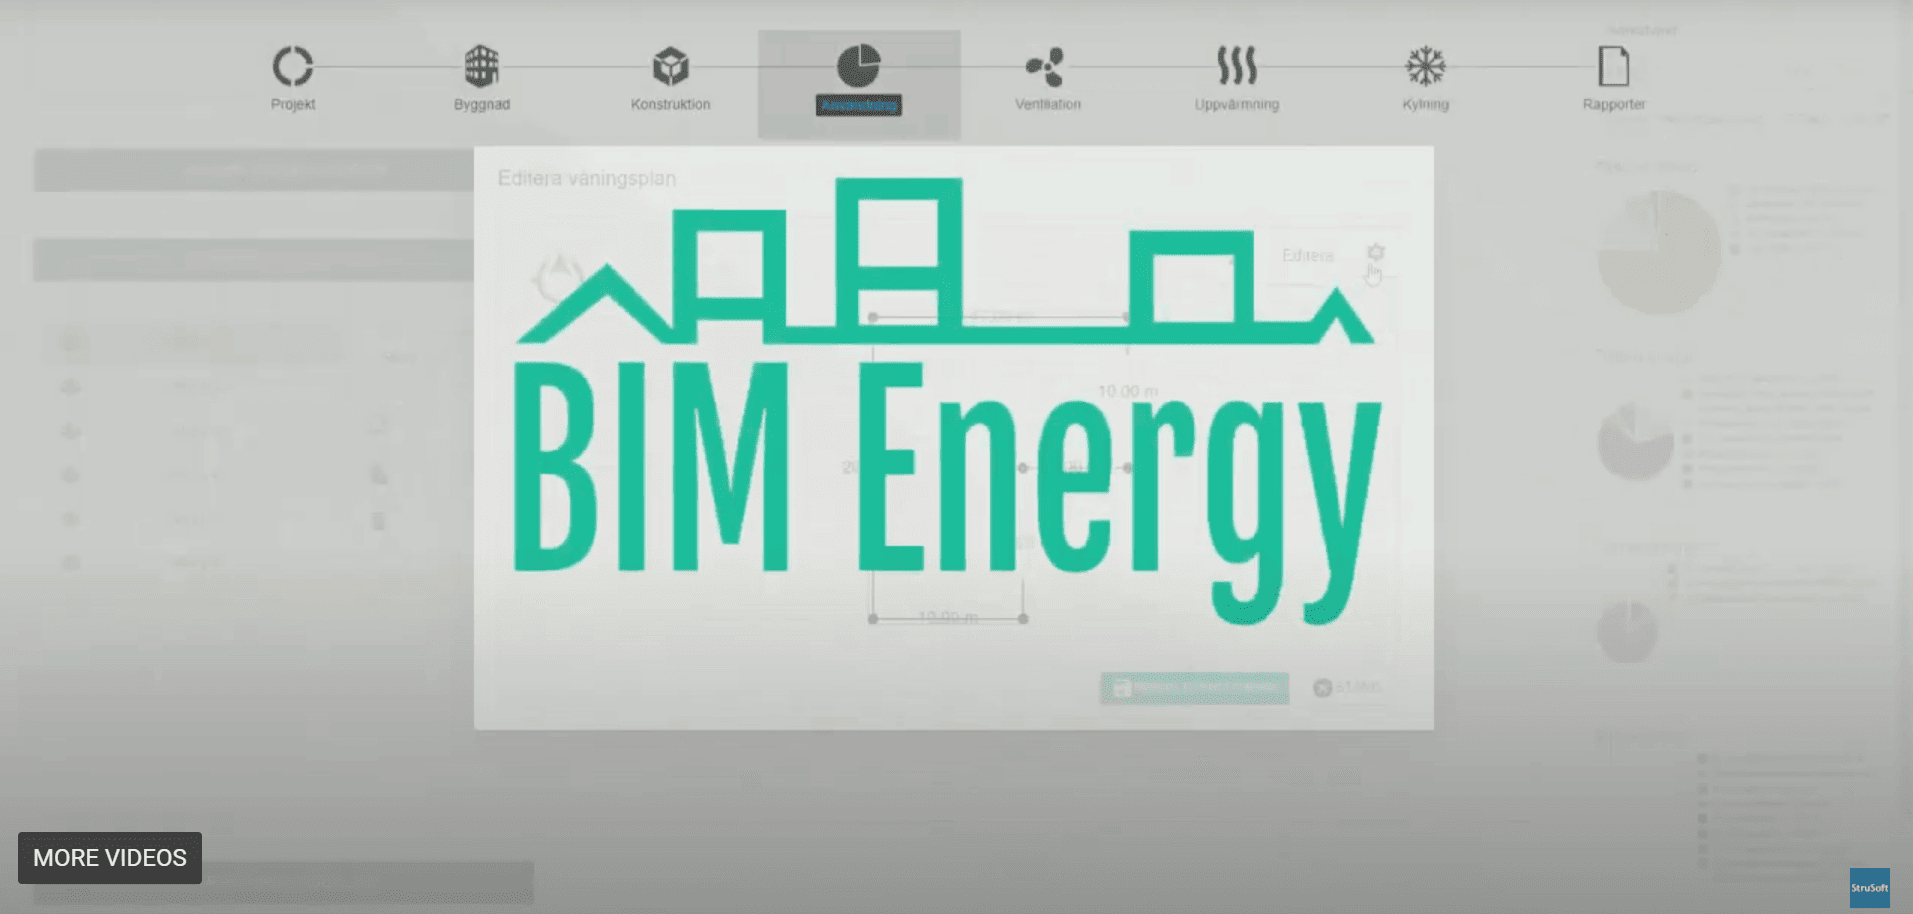 Bim energy Video Tutorials